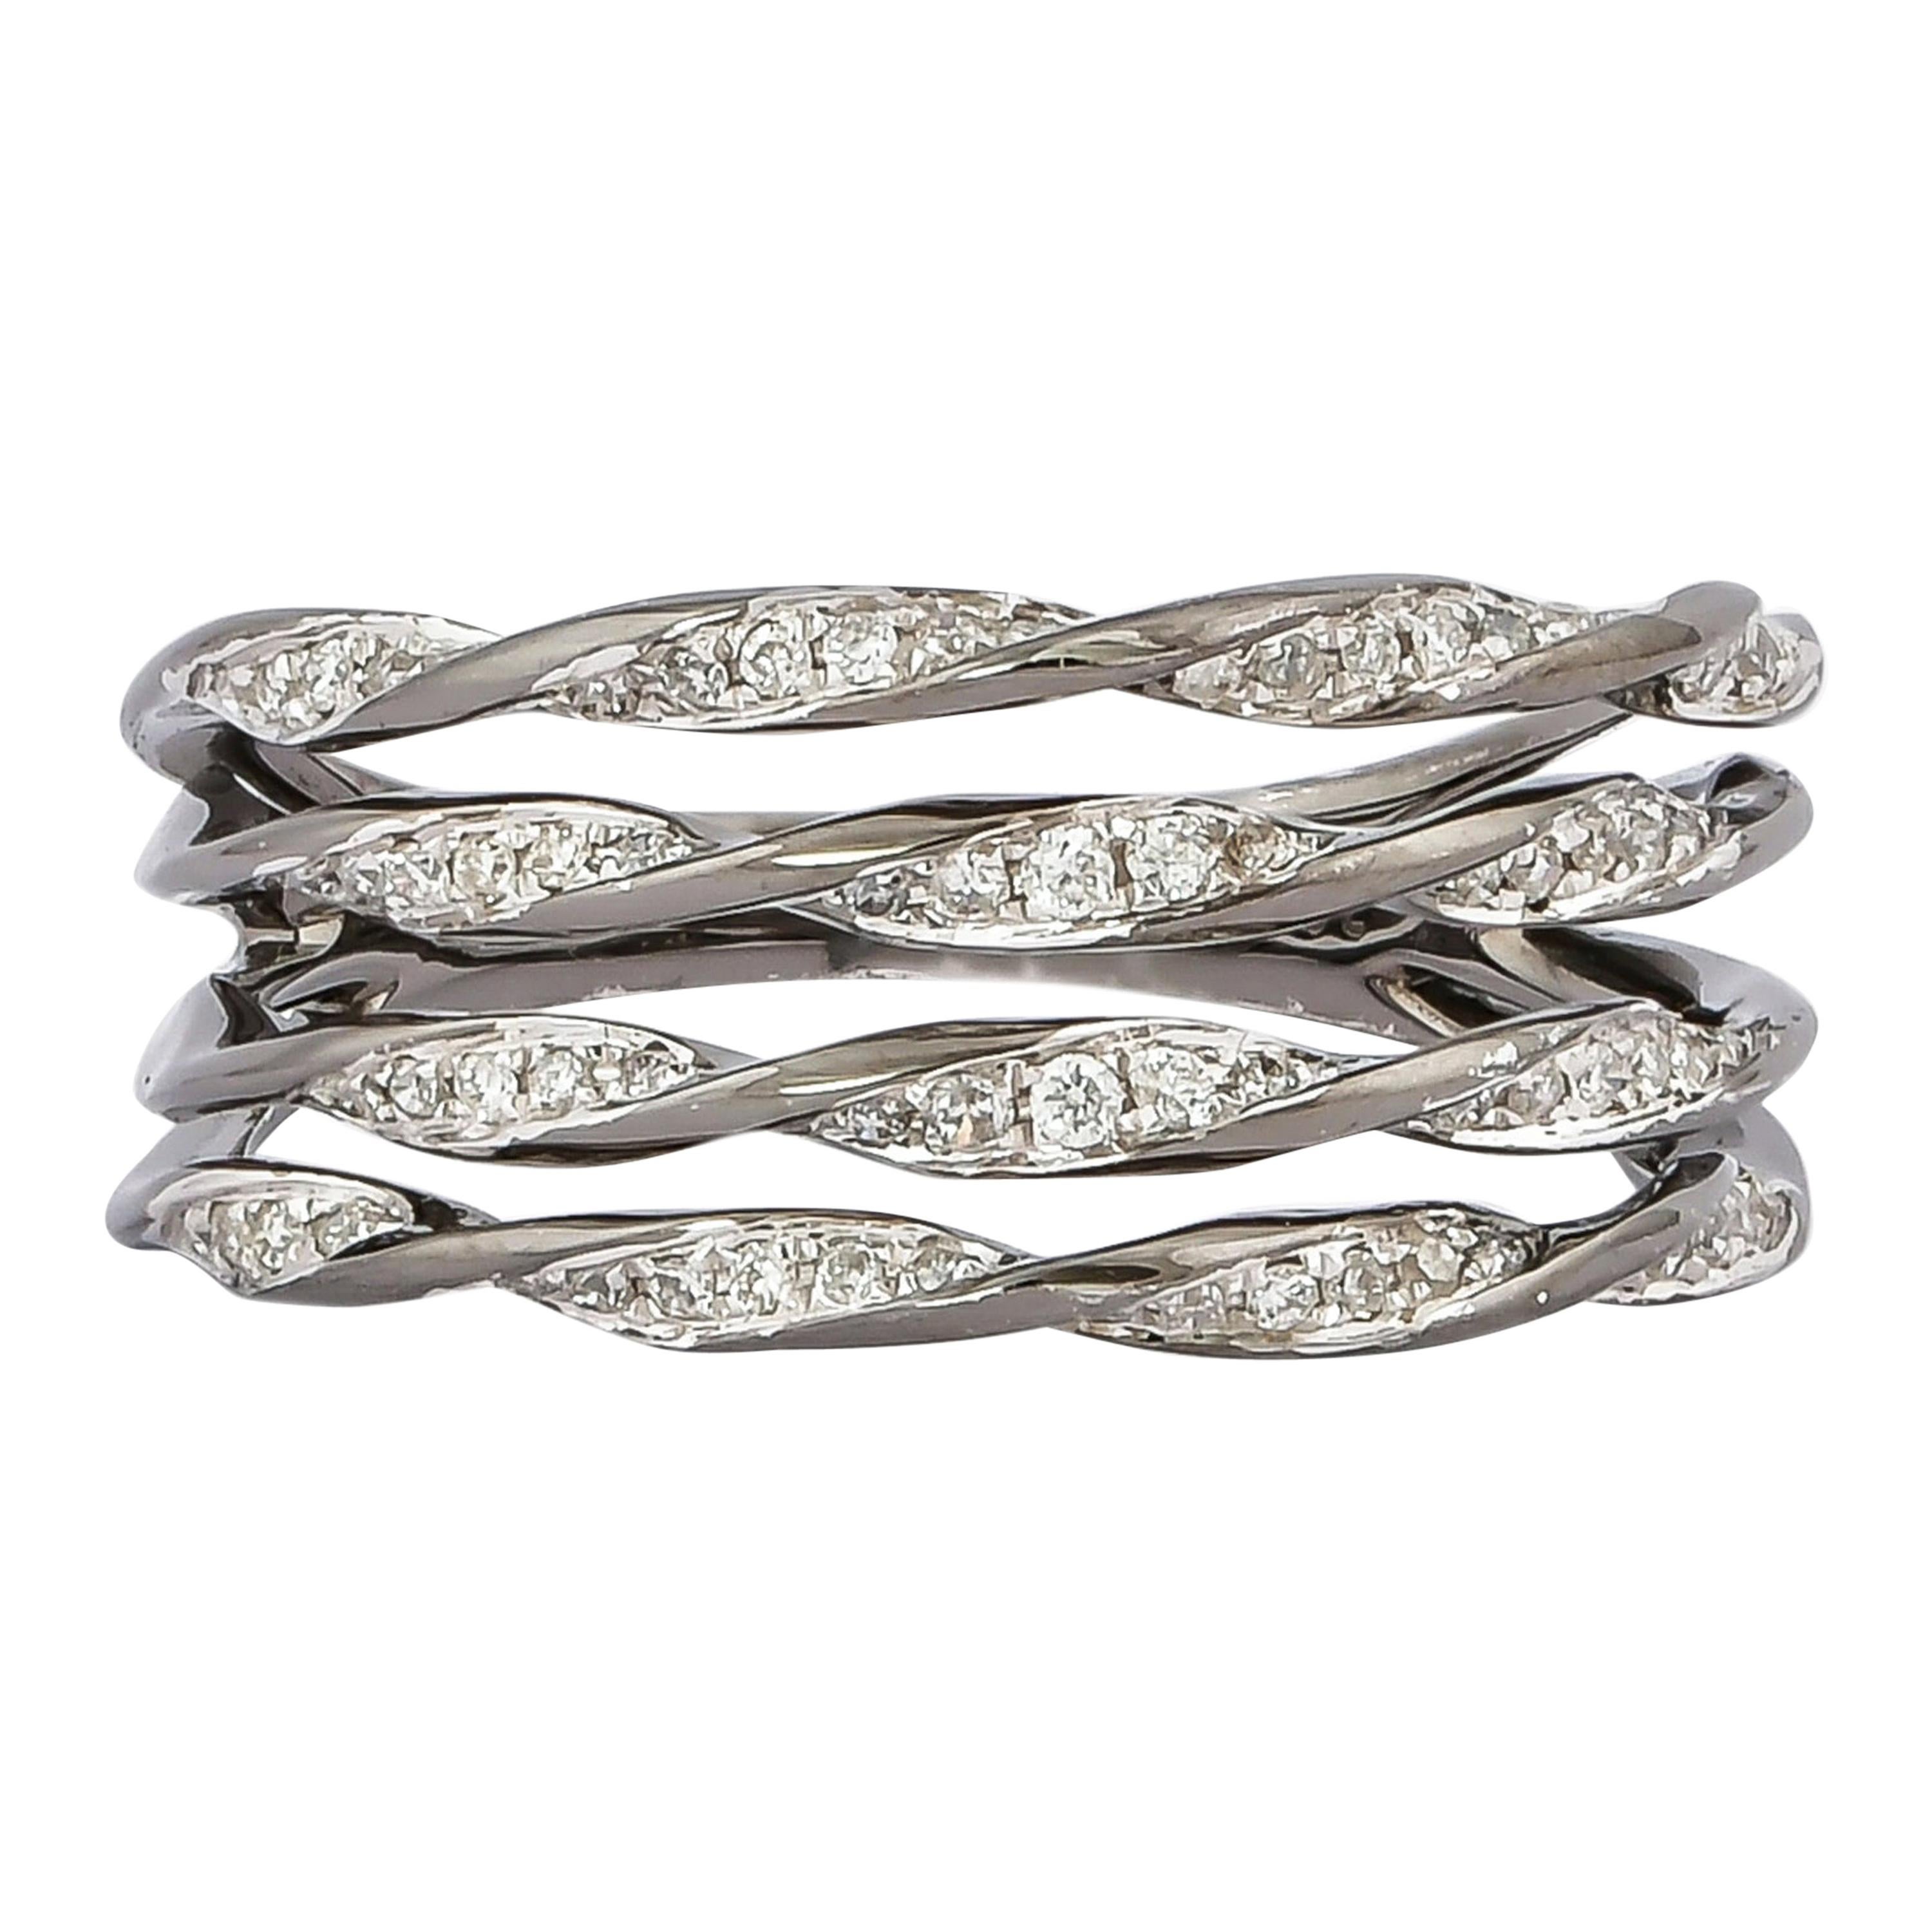 0.541 Carat GVS Diamond Band Ring in 18 Karat White Gold For Sale at ...